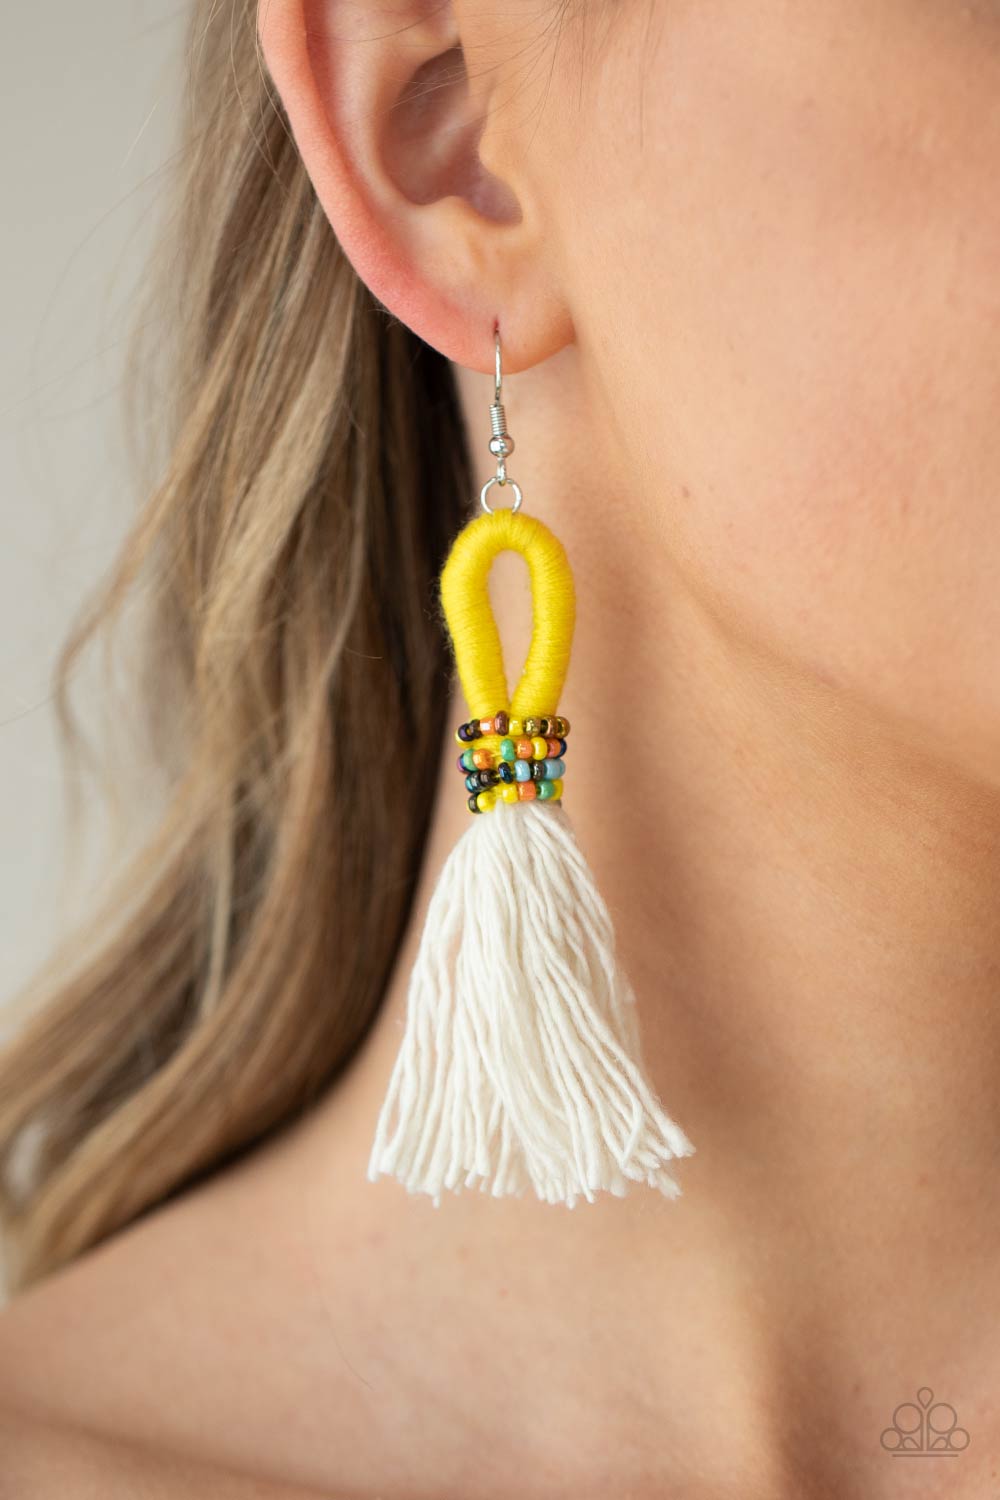 The Dustup - Yellow earrings